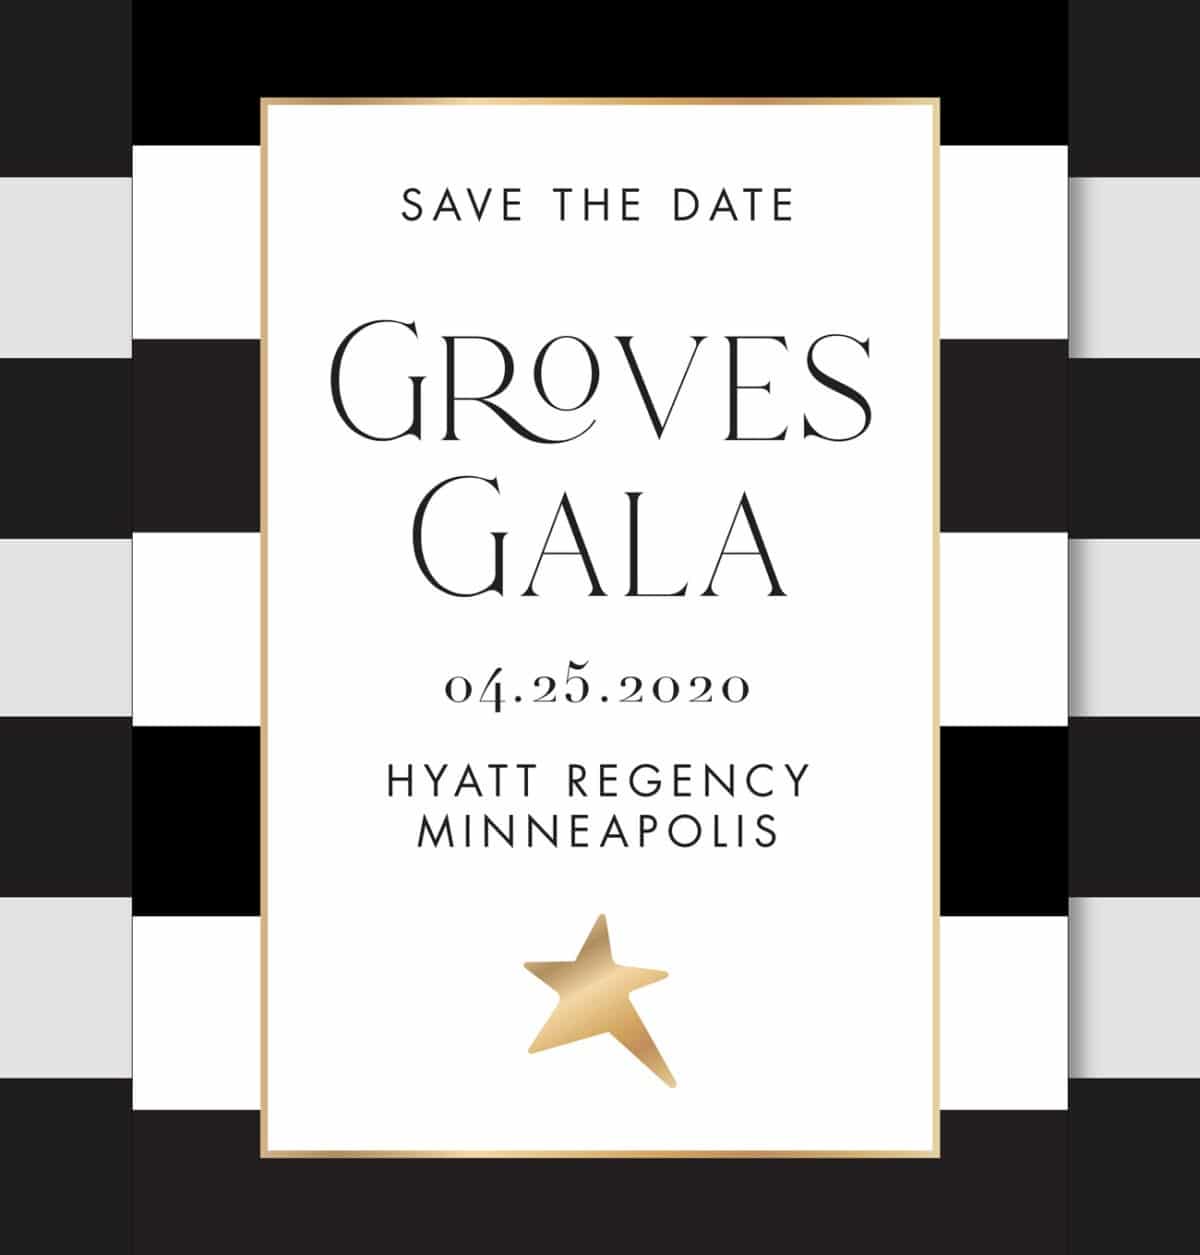 Groves Gala Invitation